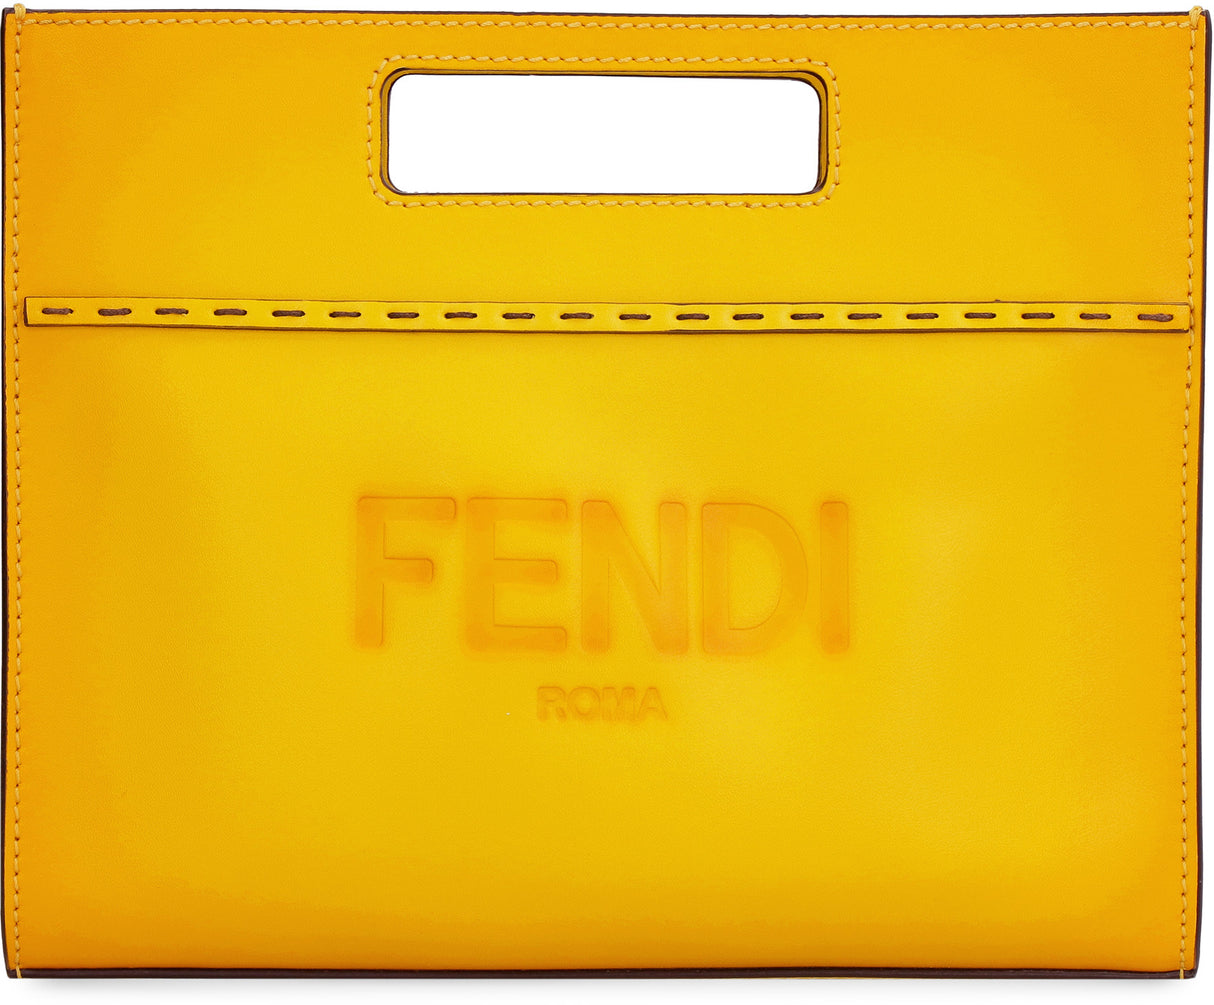 FENDI Yellow Leather Messenger Handbag for Men - SS22 Collection